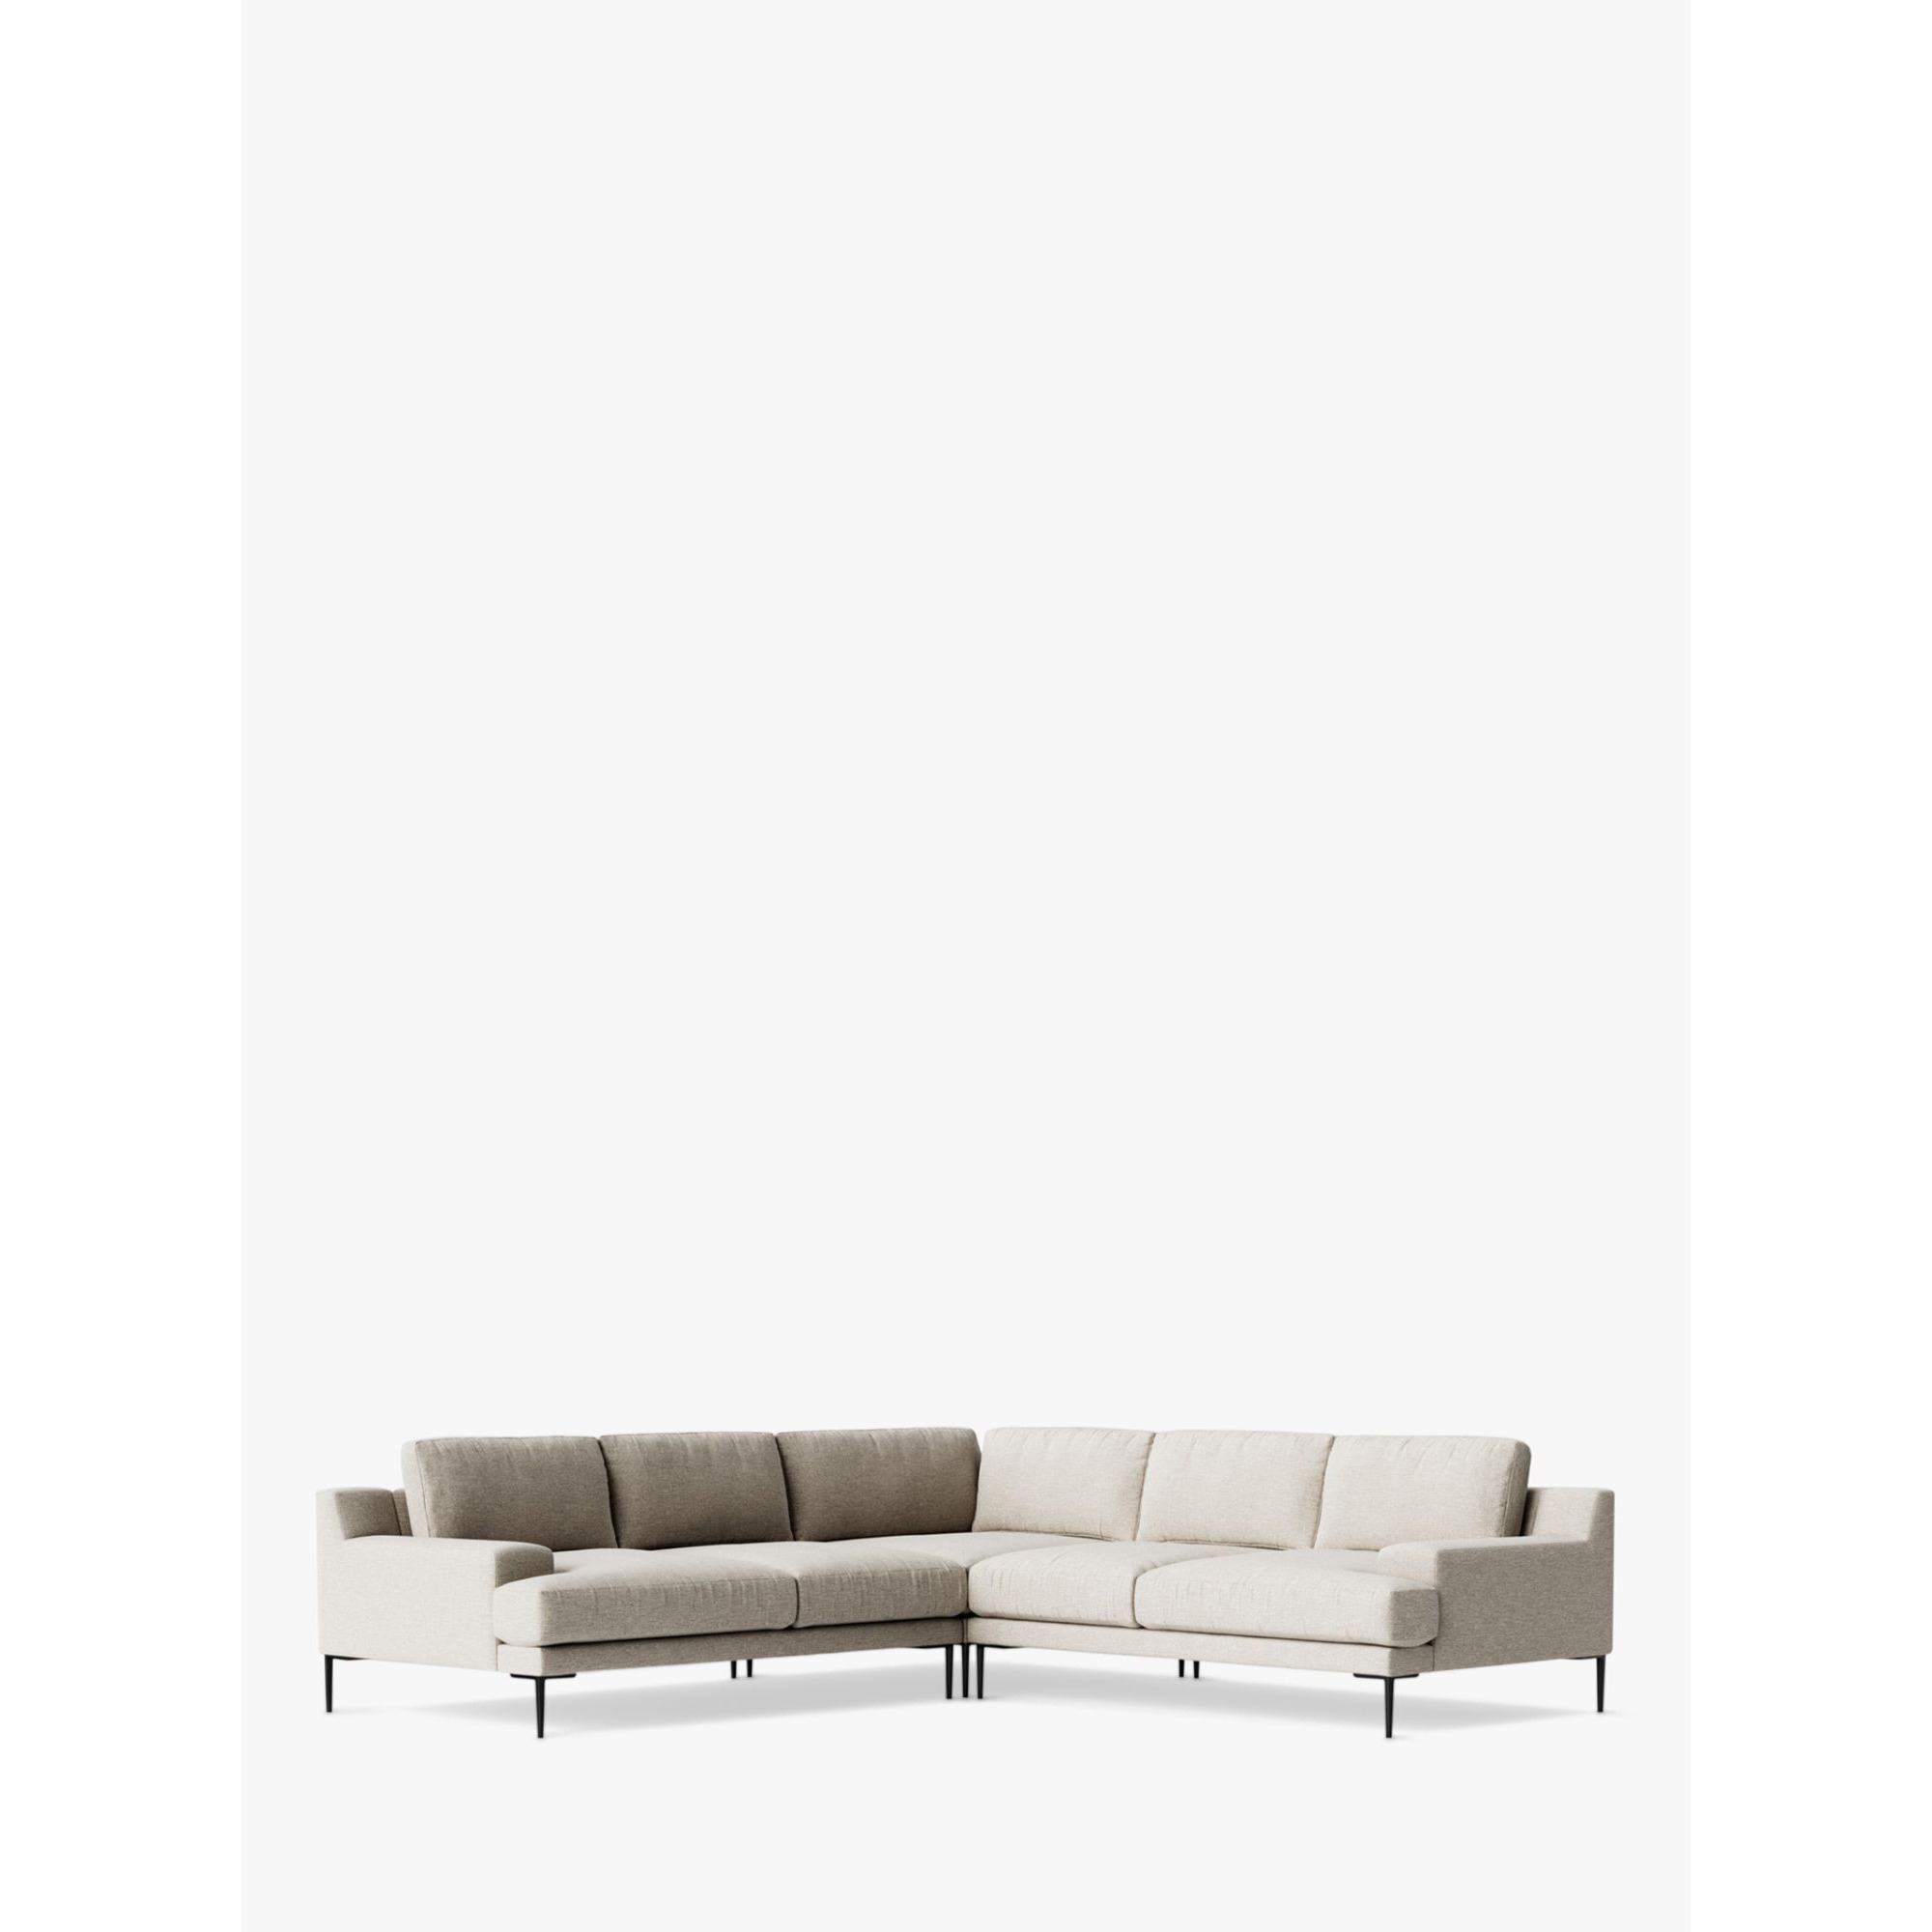 Swoon Almera 5 Seater Corner Sofa, Metal Leg - image 1